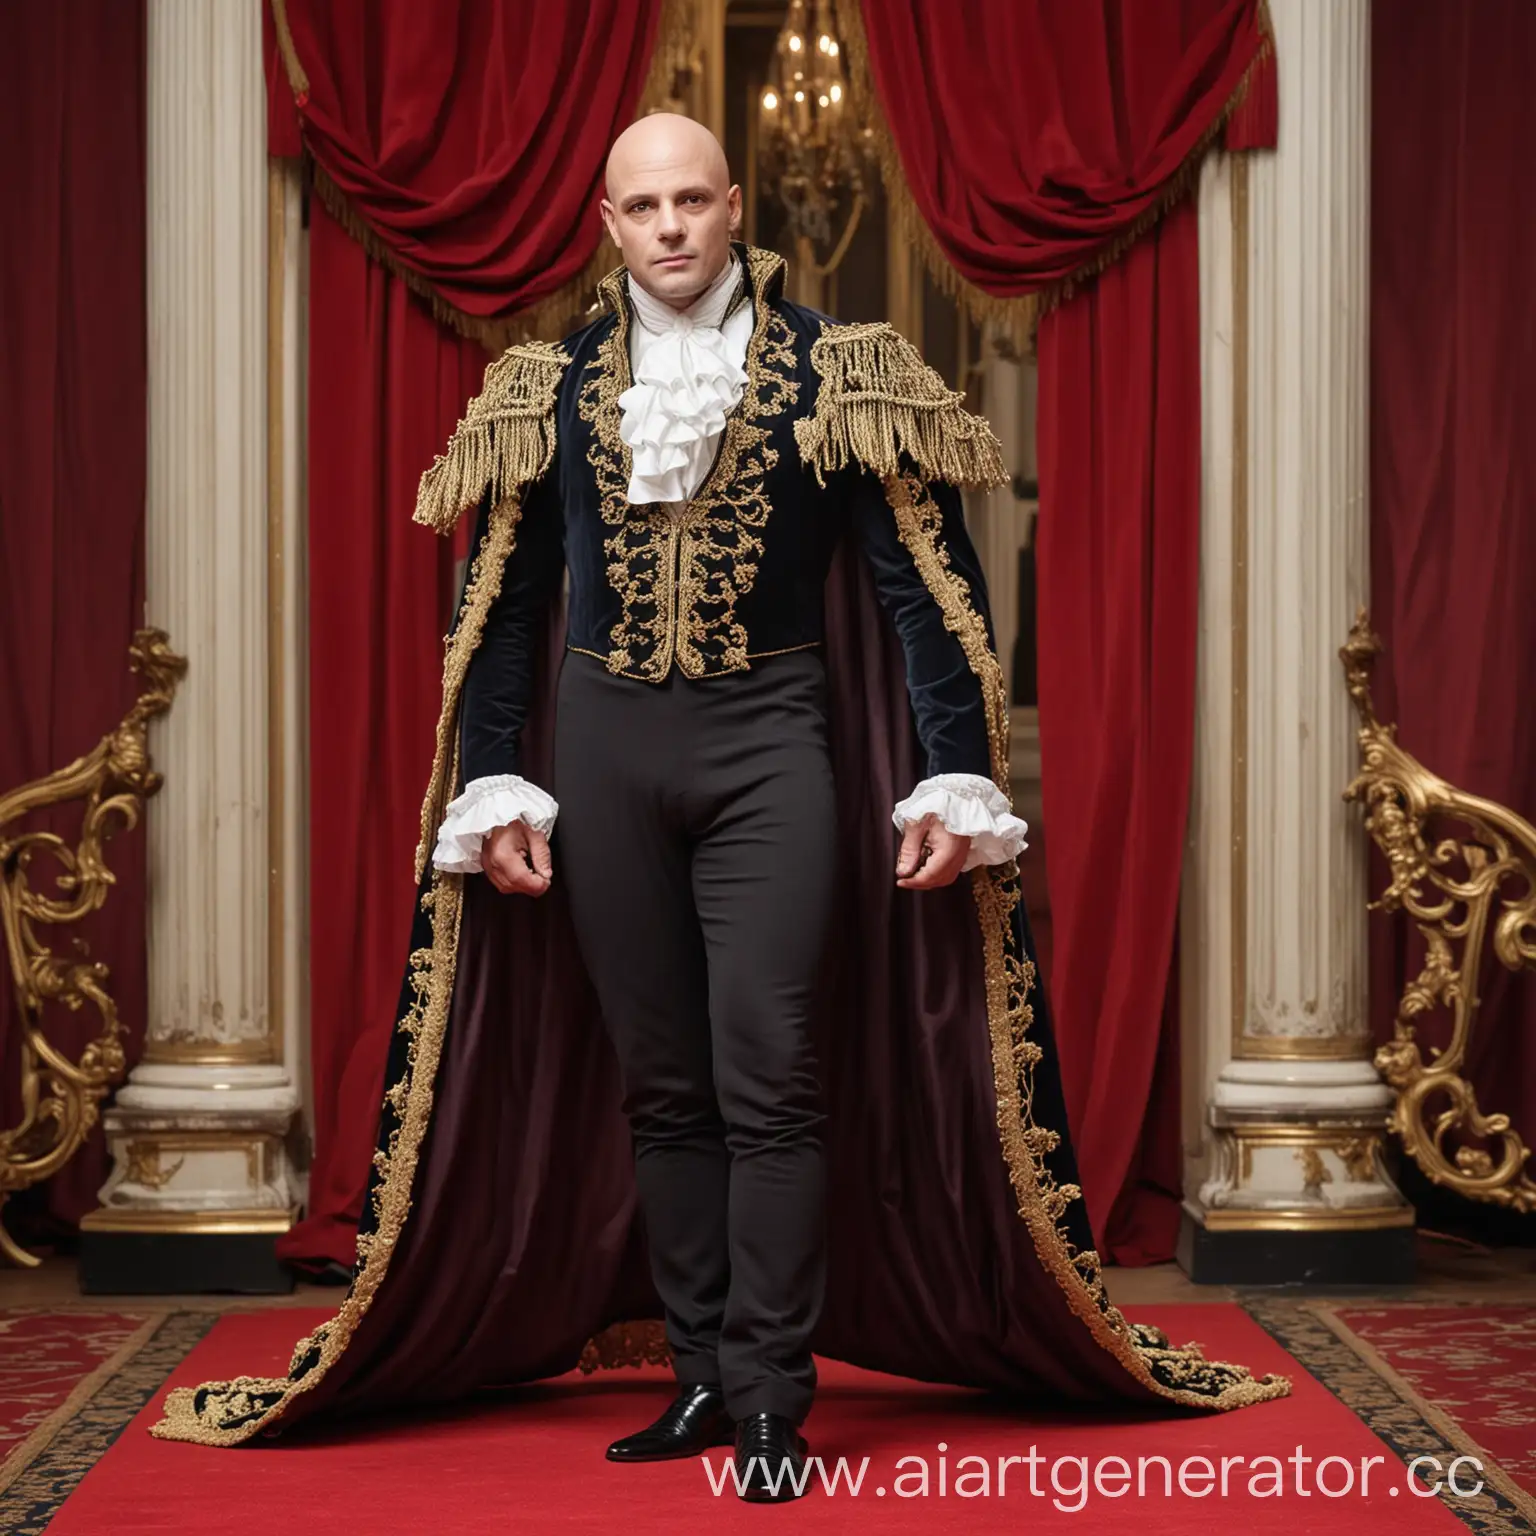 Elegant-French-Opera-Singer-Man-in-Lavish-Costume-on-Red-Carpet